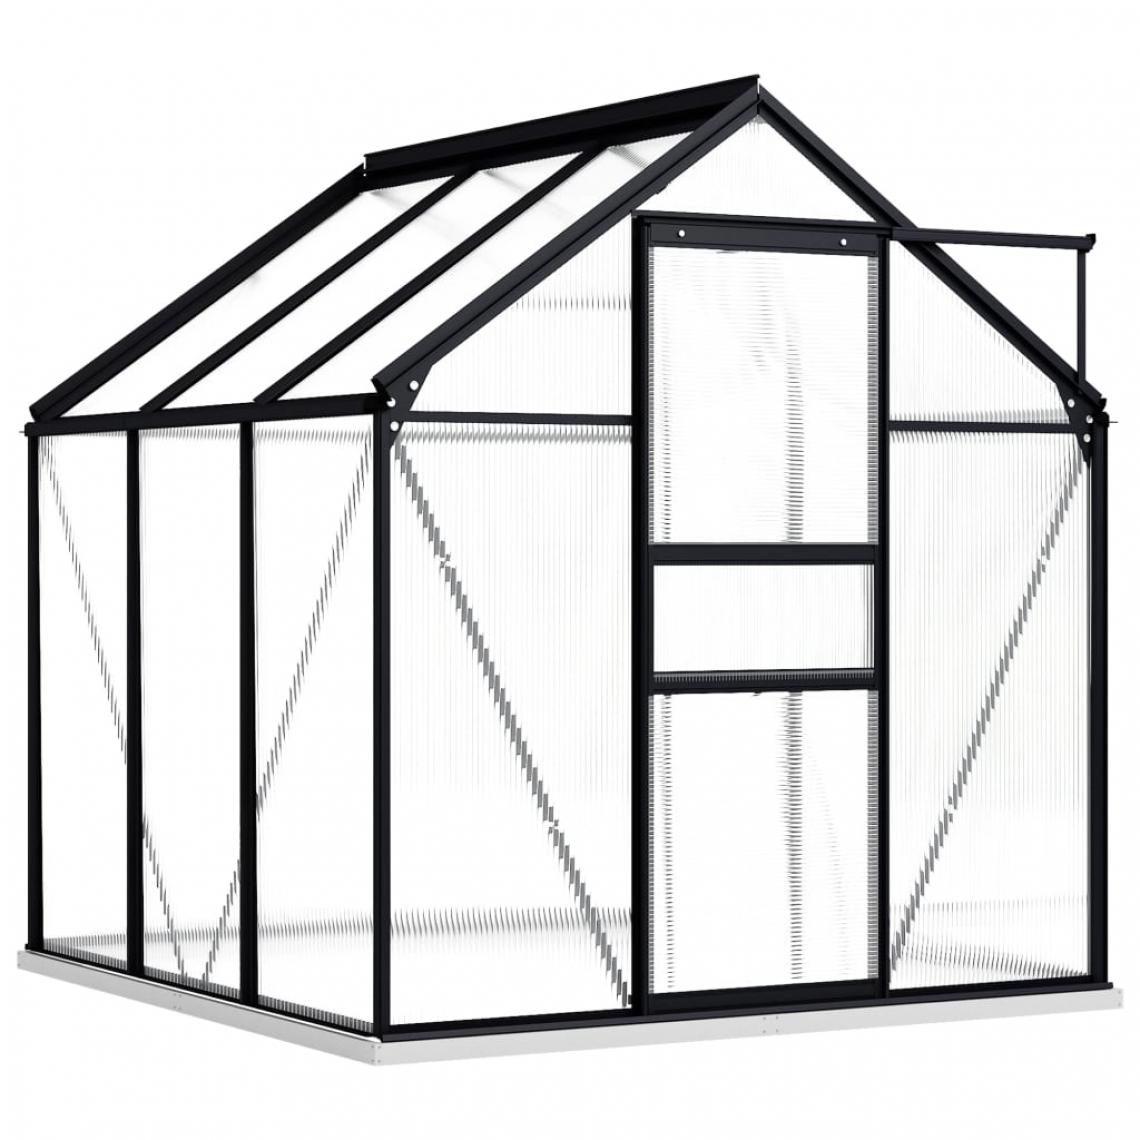 Icaverne - Icaverne - Serres de jardin reference Serre avec cadre de base Anthracite Aluminium 3,61 m² - Serres en verre